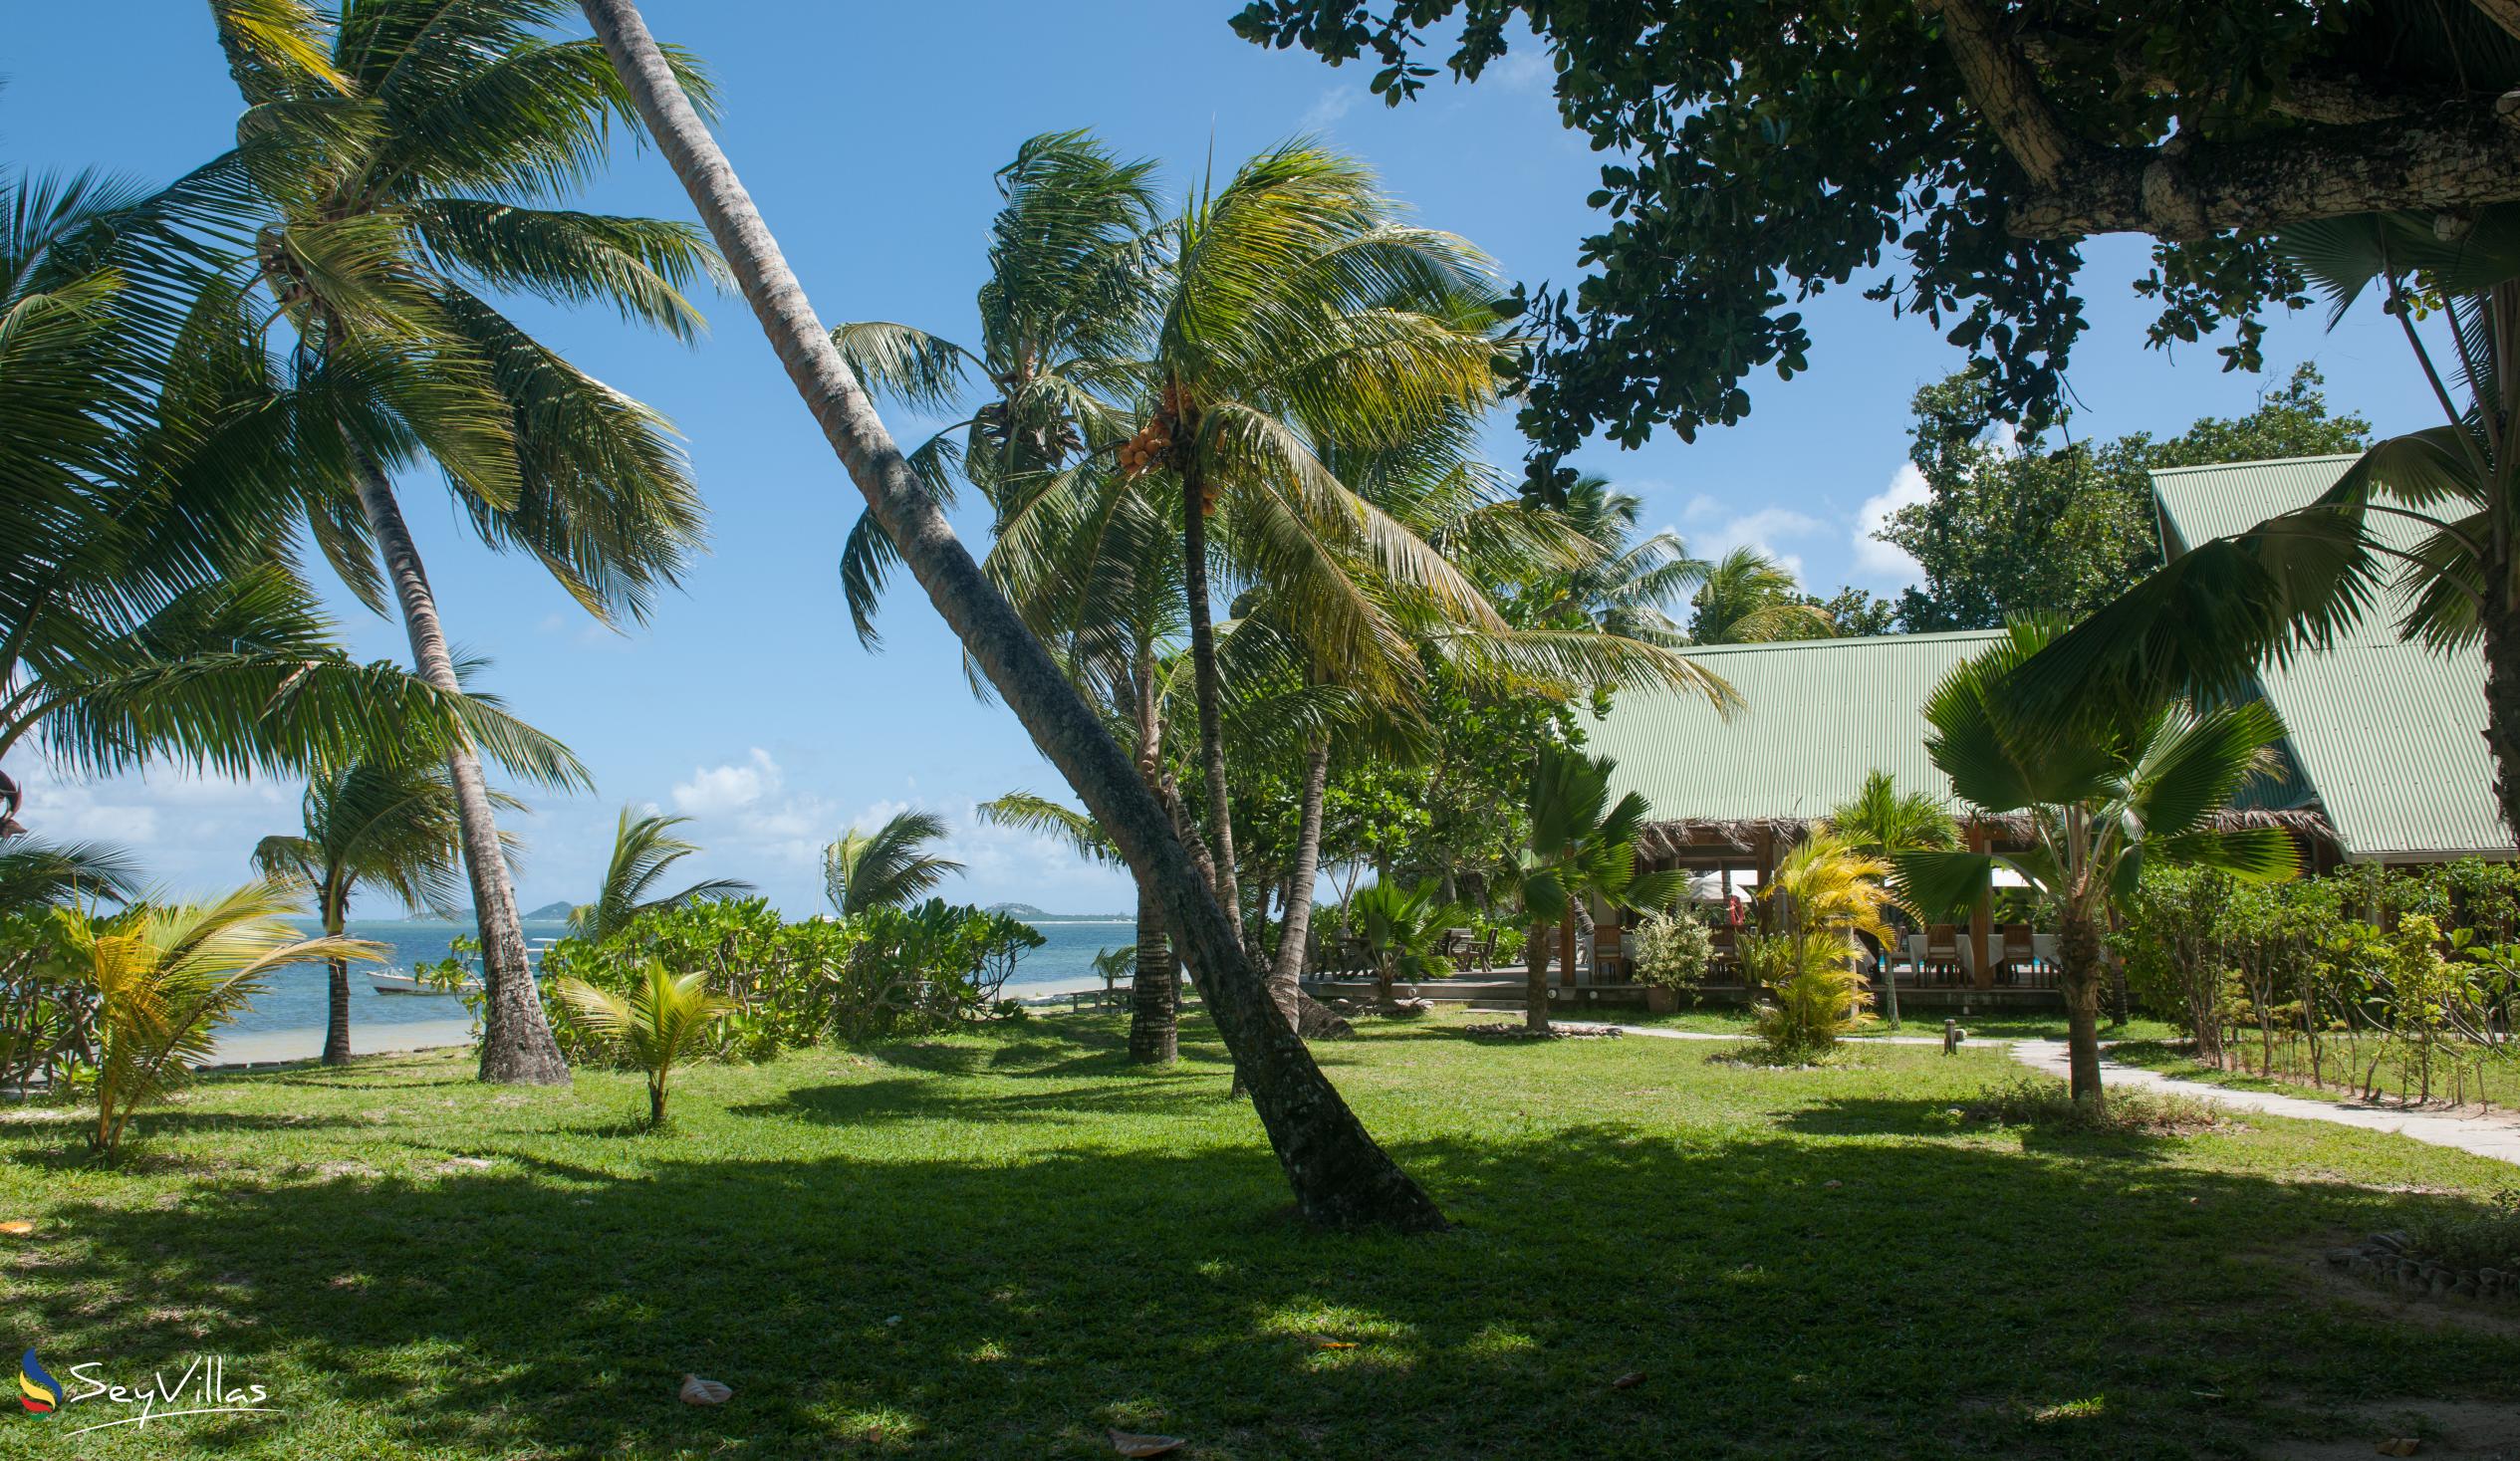 Photo 14: Indian Ocean Lodge - Outdoor area - Praslin (Seychelles)